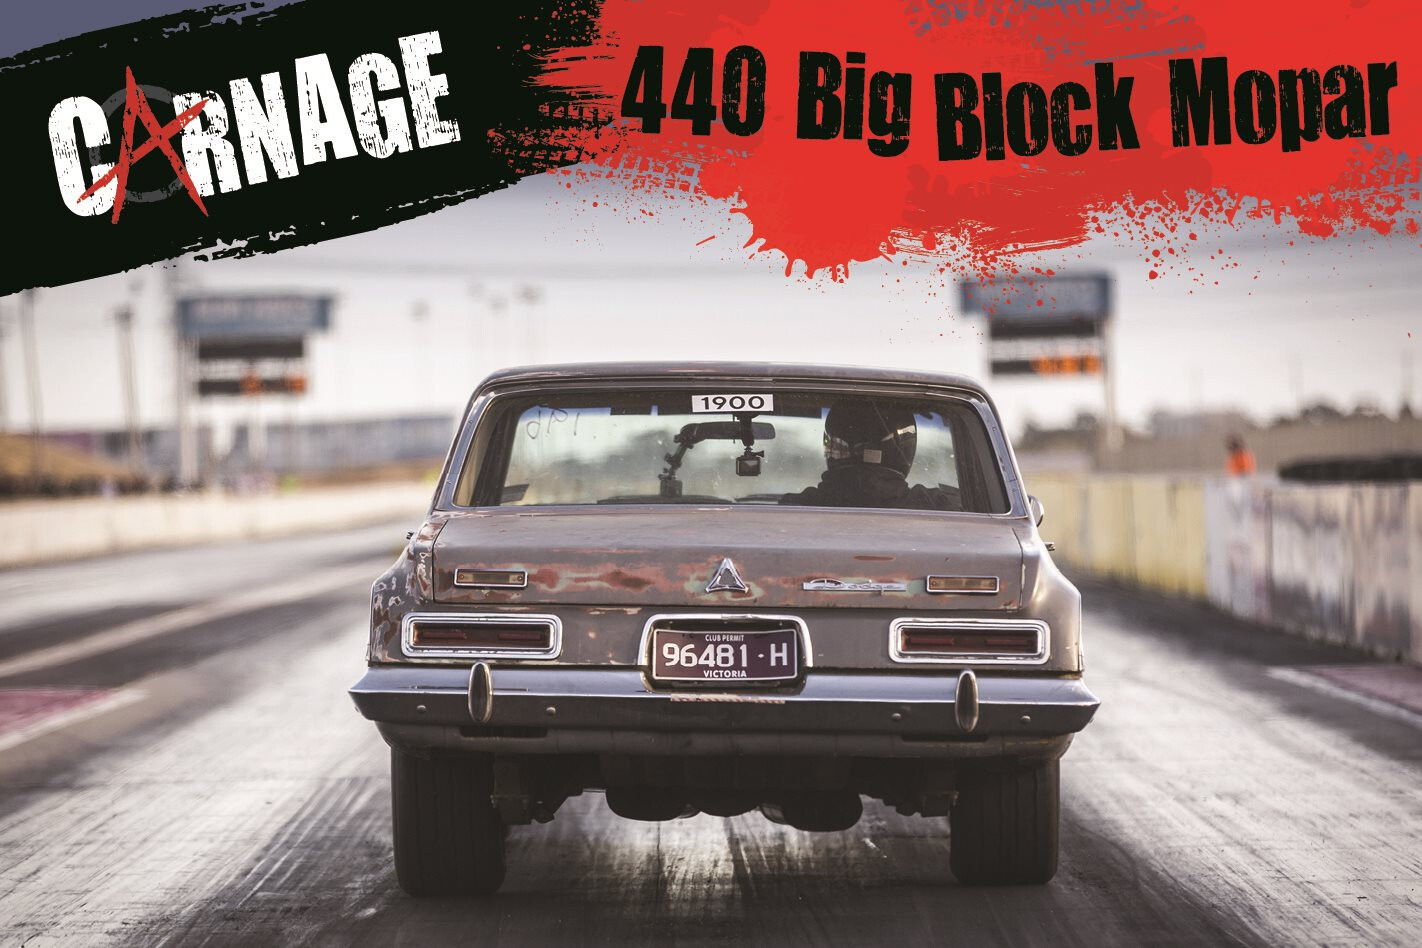 Mr Dodgey 440-powered 1963 Dodge Phoenix Part Five – Carnage